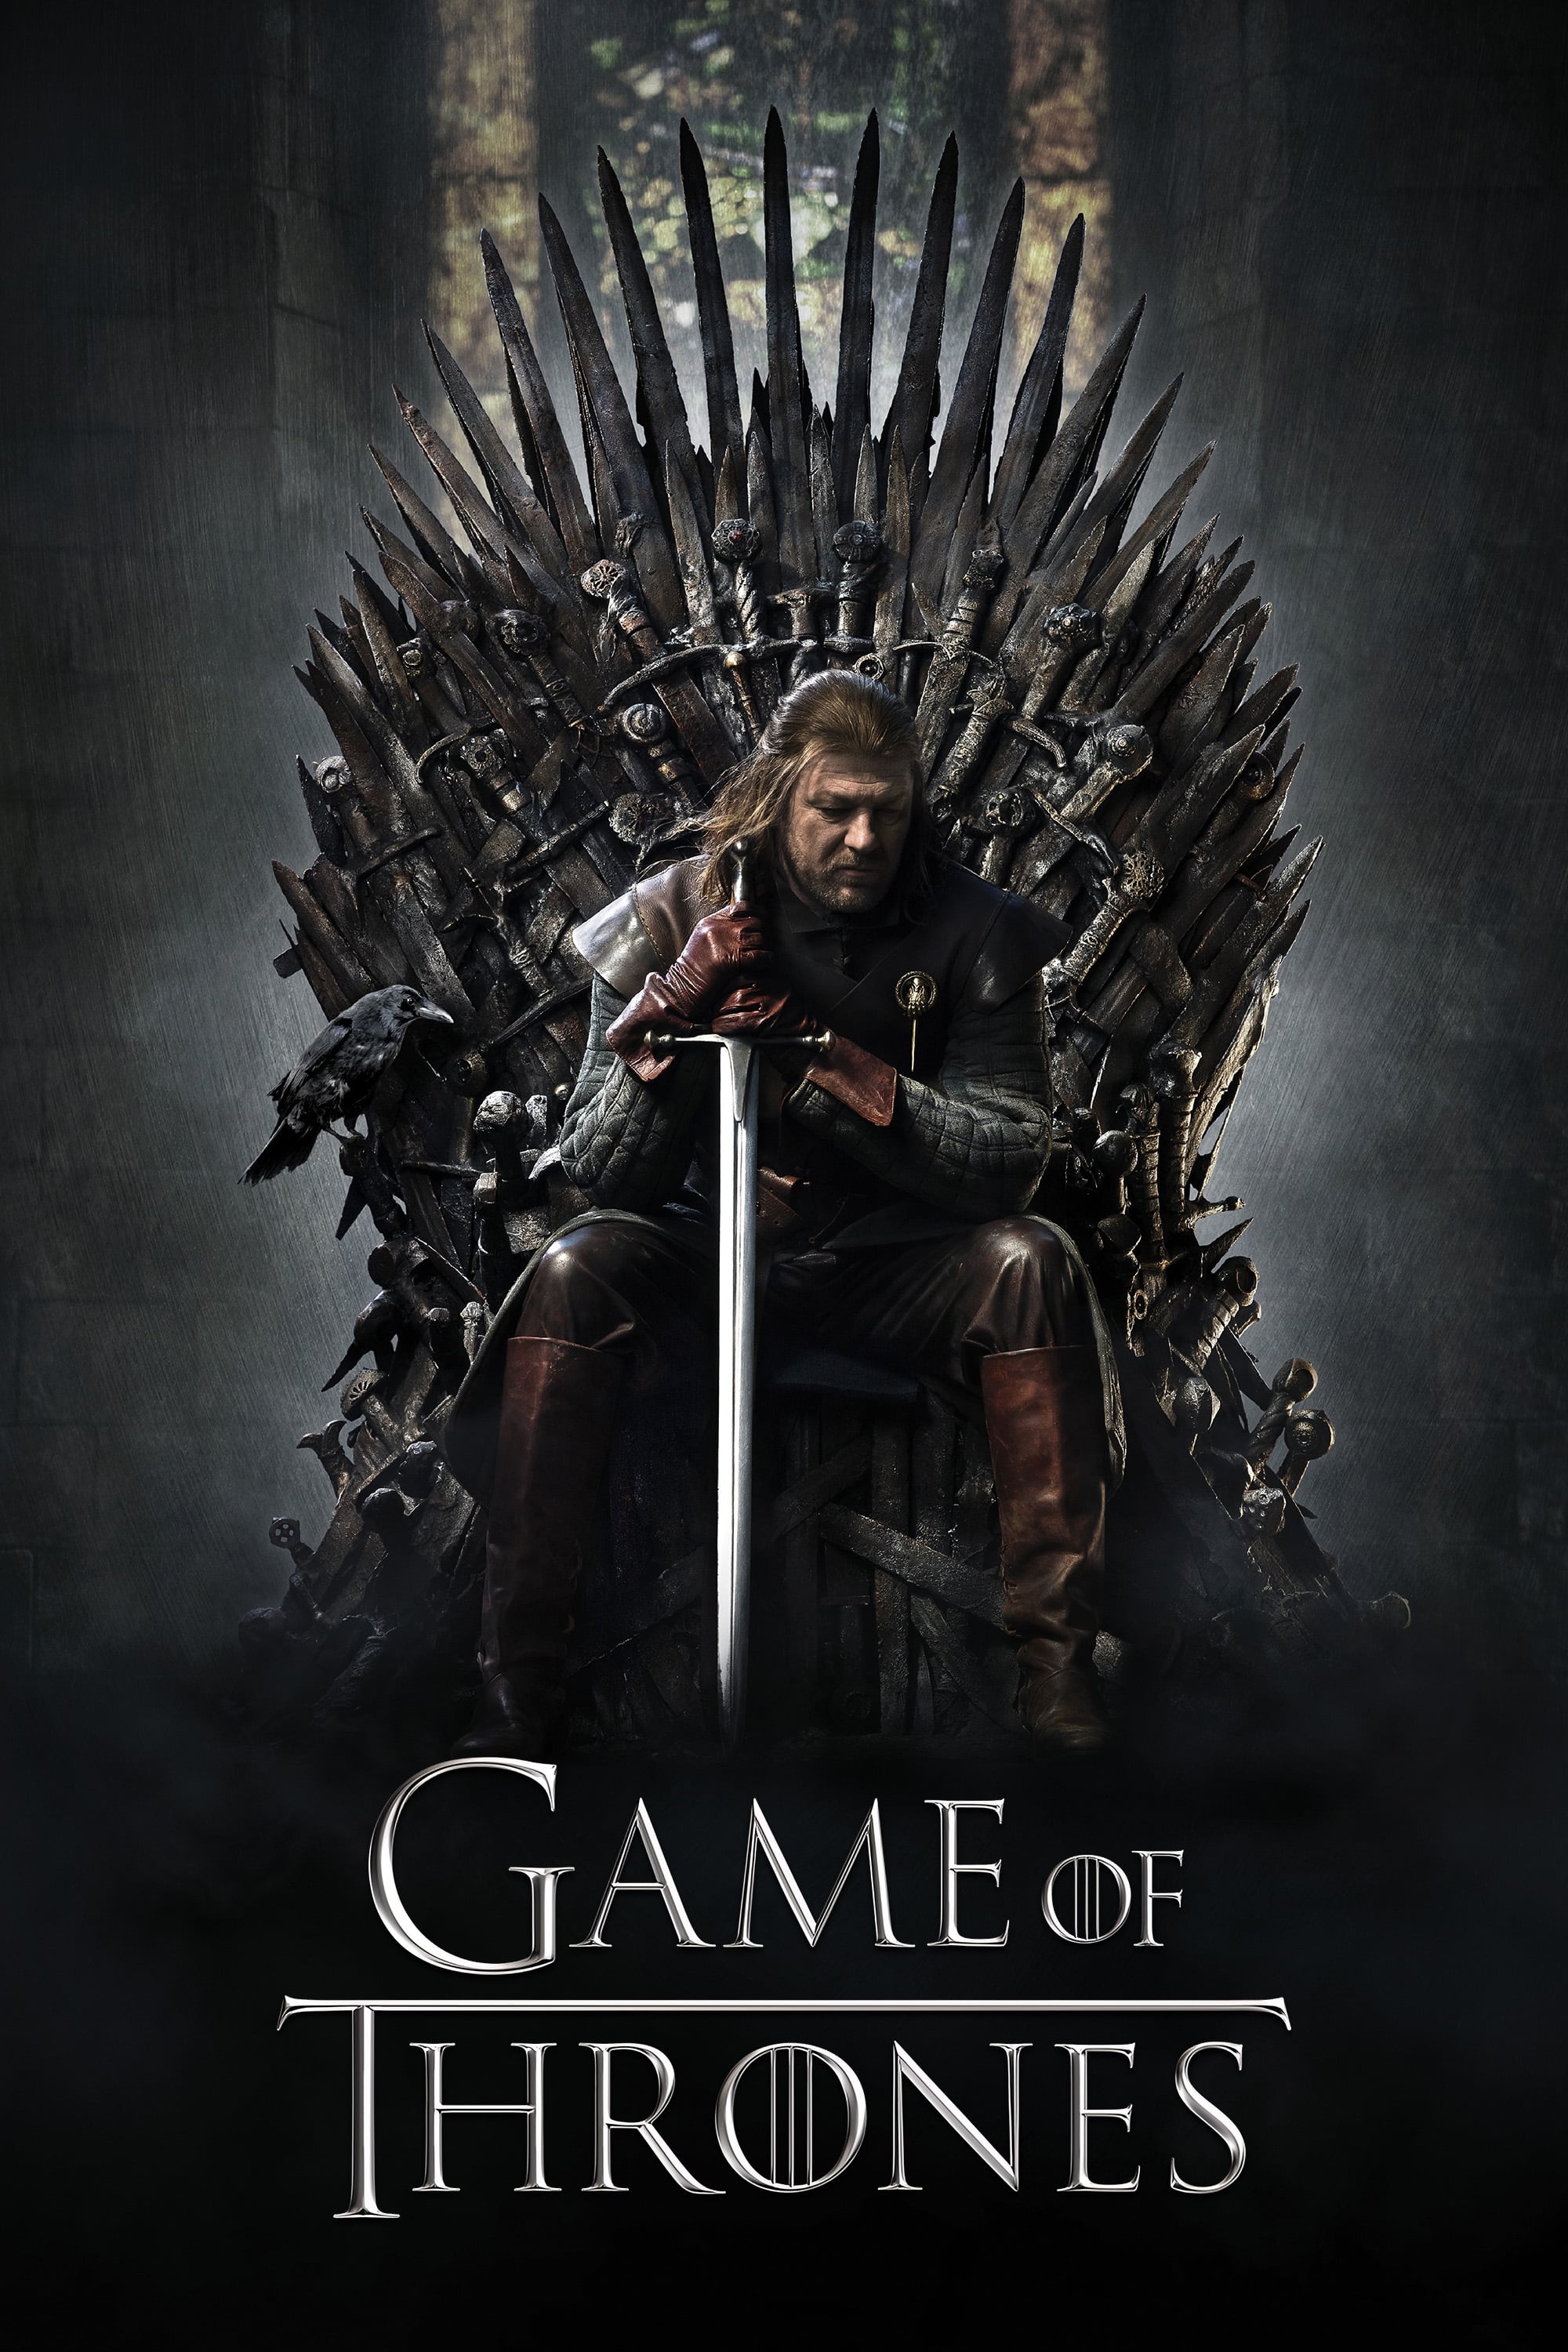 Game of Thrones - Season 1 มหาศึกชิงบัลลังก์ (2011) (English DTS 5.1-Thai 5.1) (Text: English-Thai) (UsersCloud)